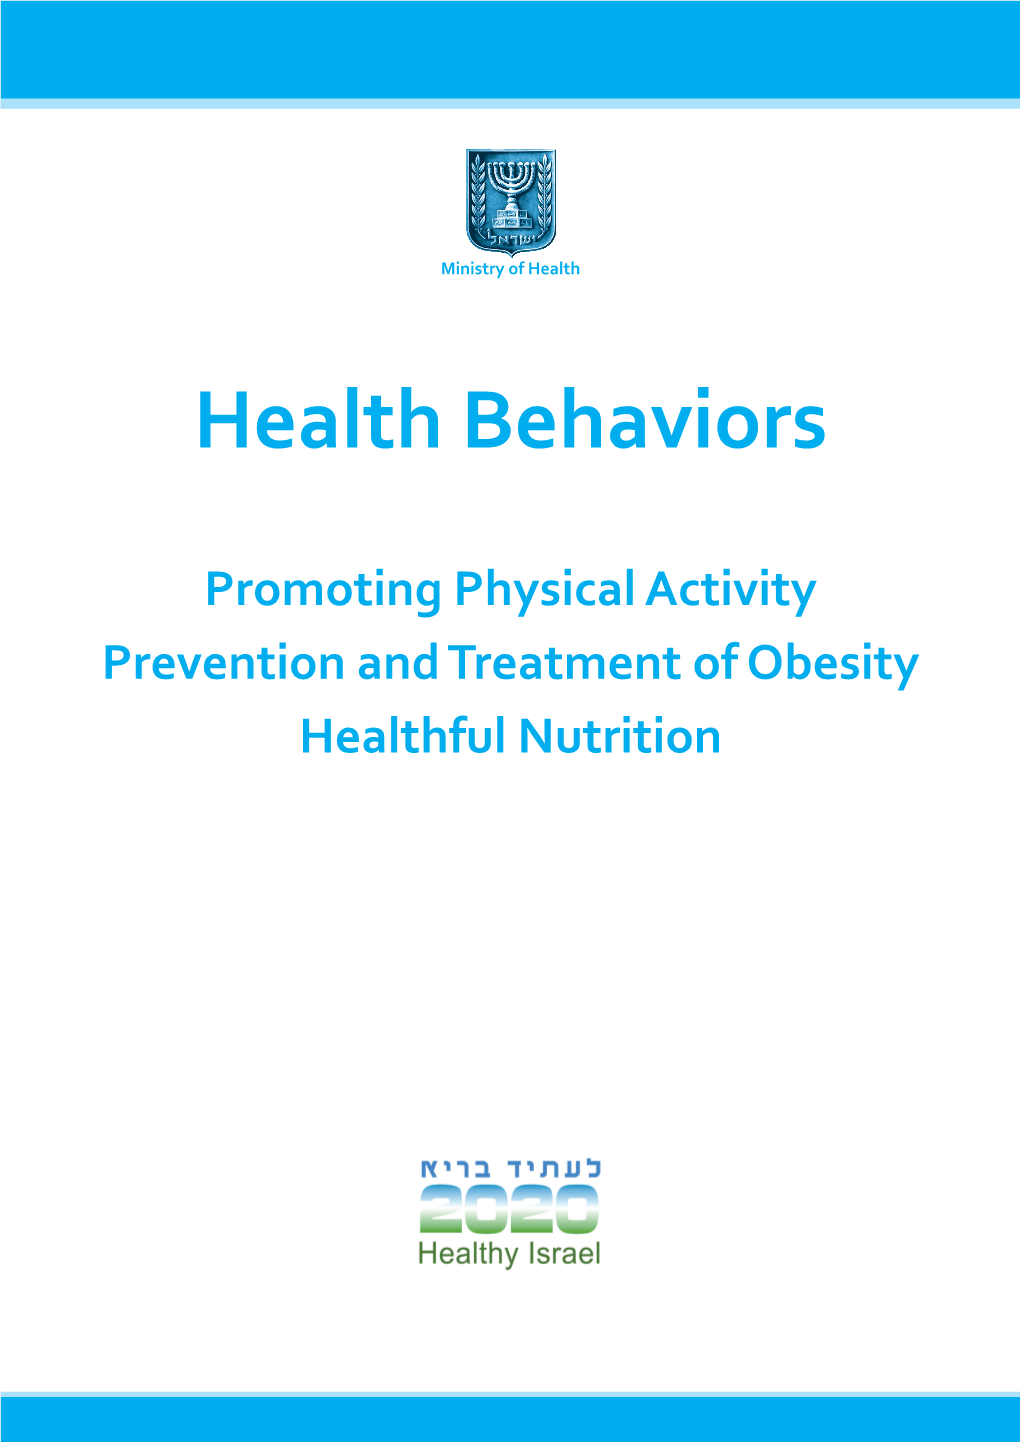 ISR 2011 Health Behaviors.Pdf